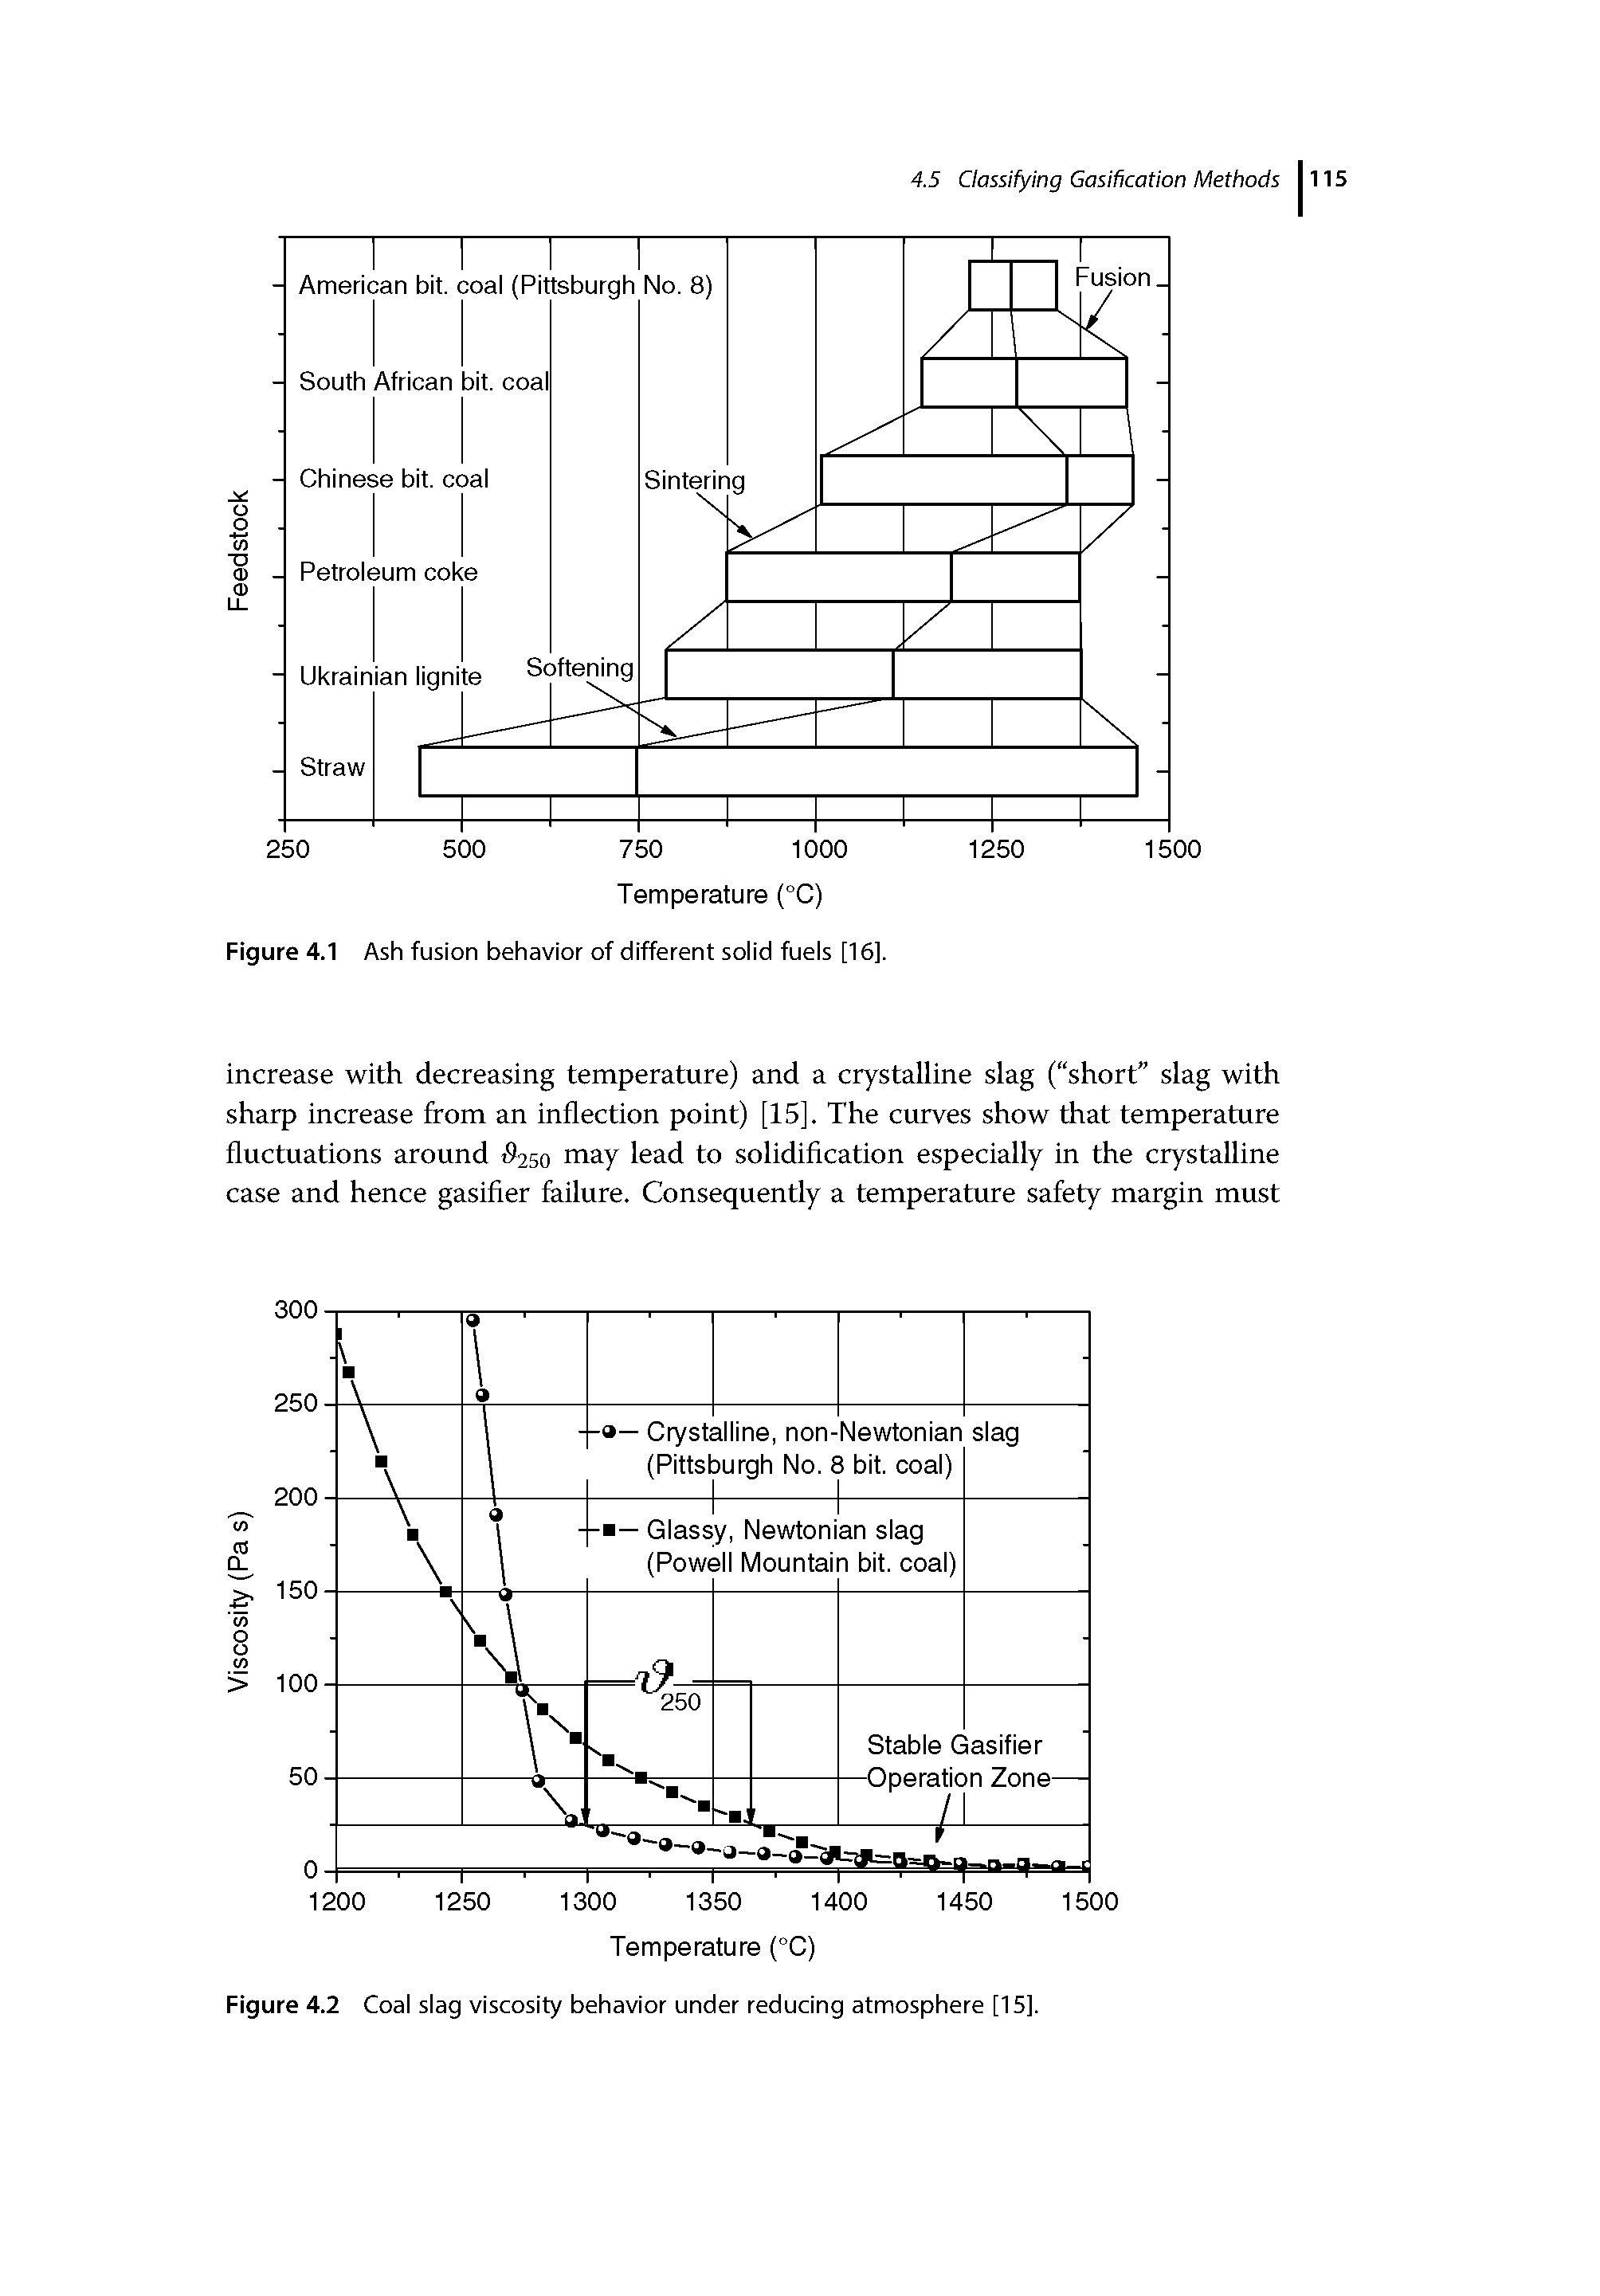 Figure 4.2 Coal slag viscosity behavior under reducing atmosphere [15].